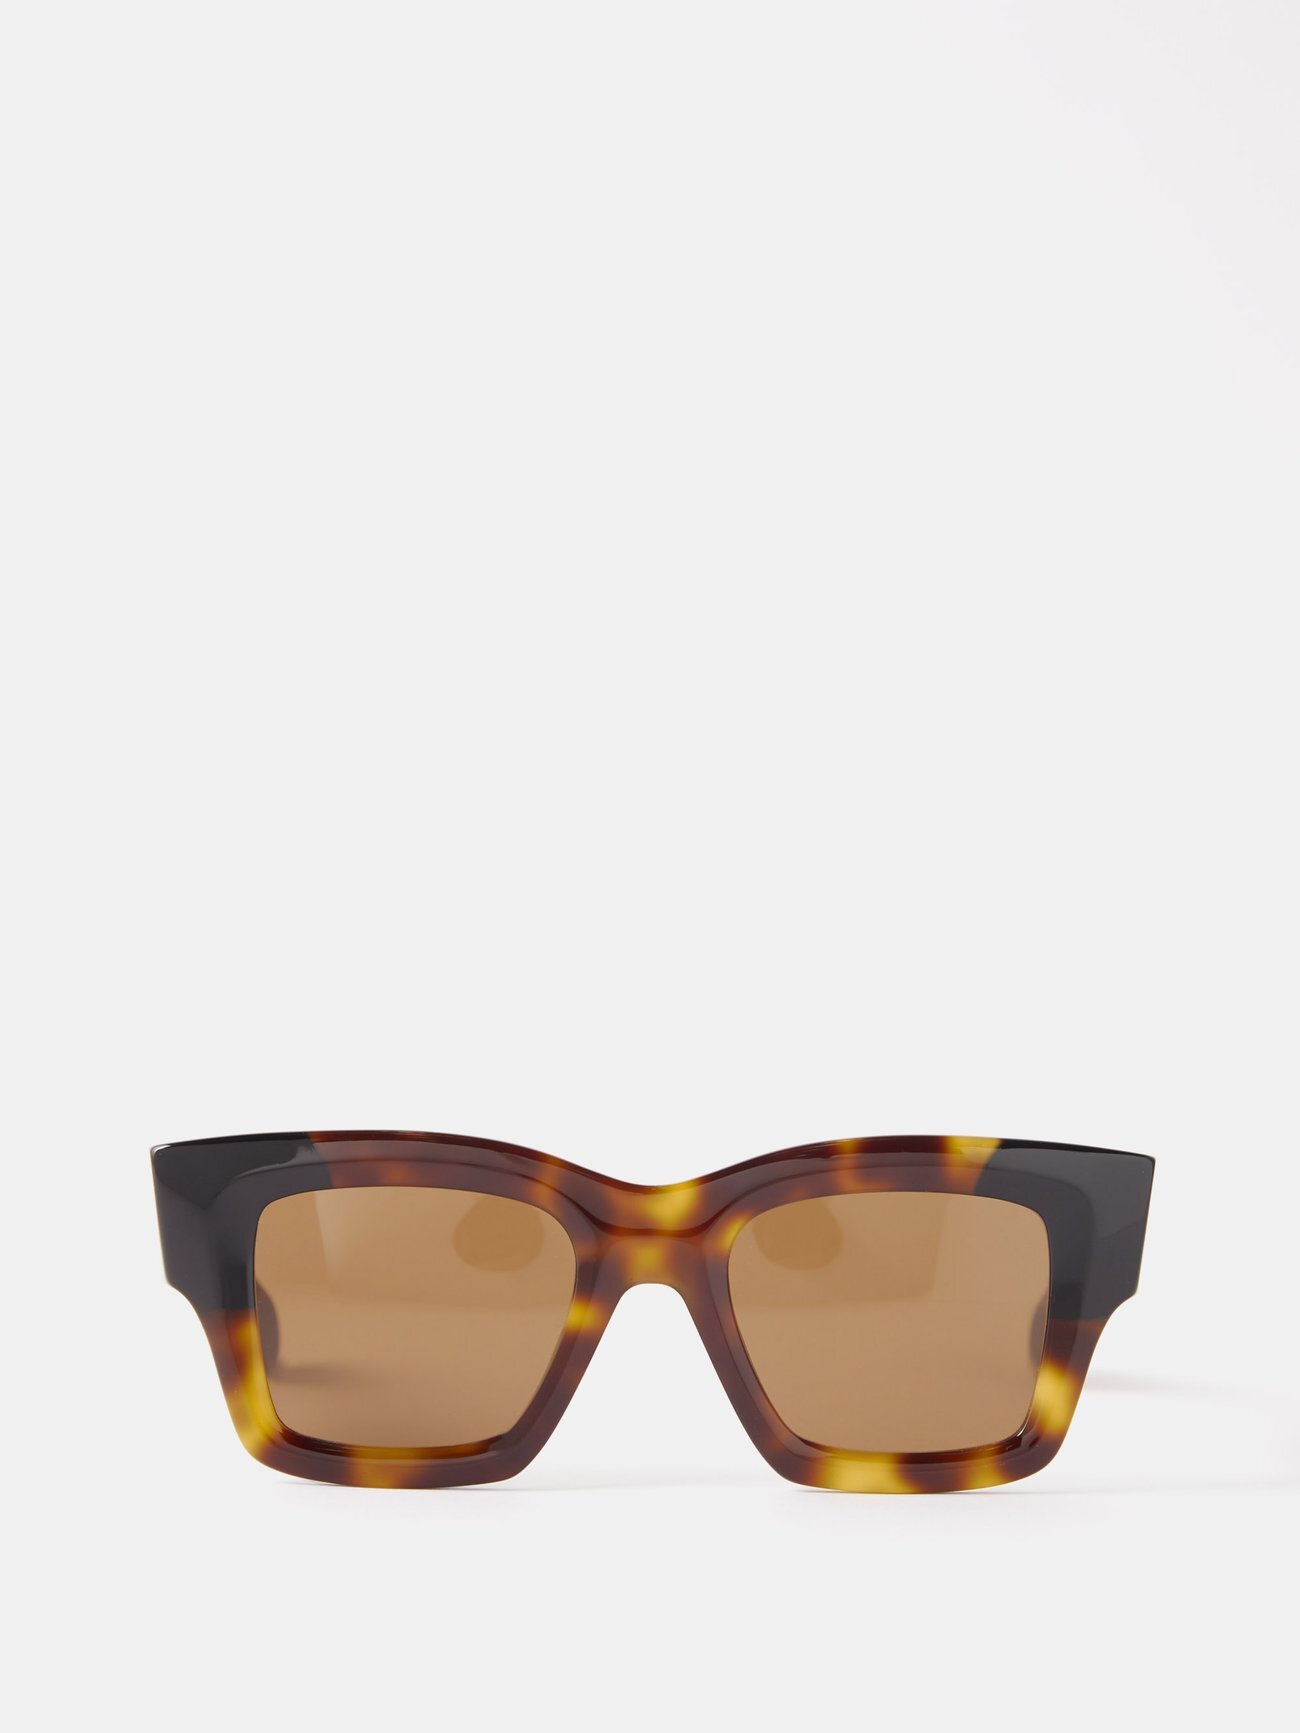 Jacquemus Eyewear - Les Lunettes Baci Square Acetate Sunglasses - Womens - Brown Multi